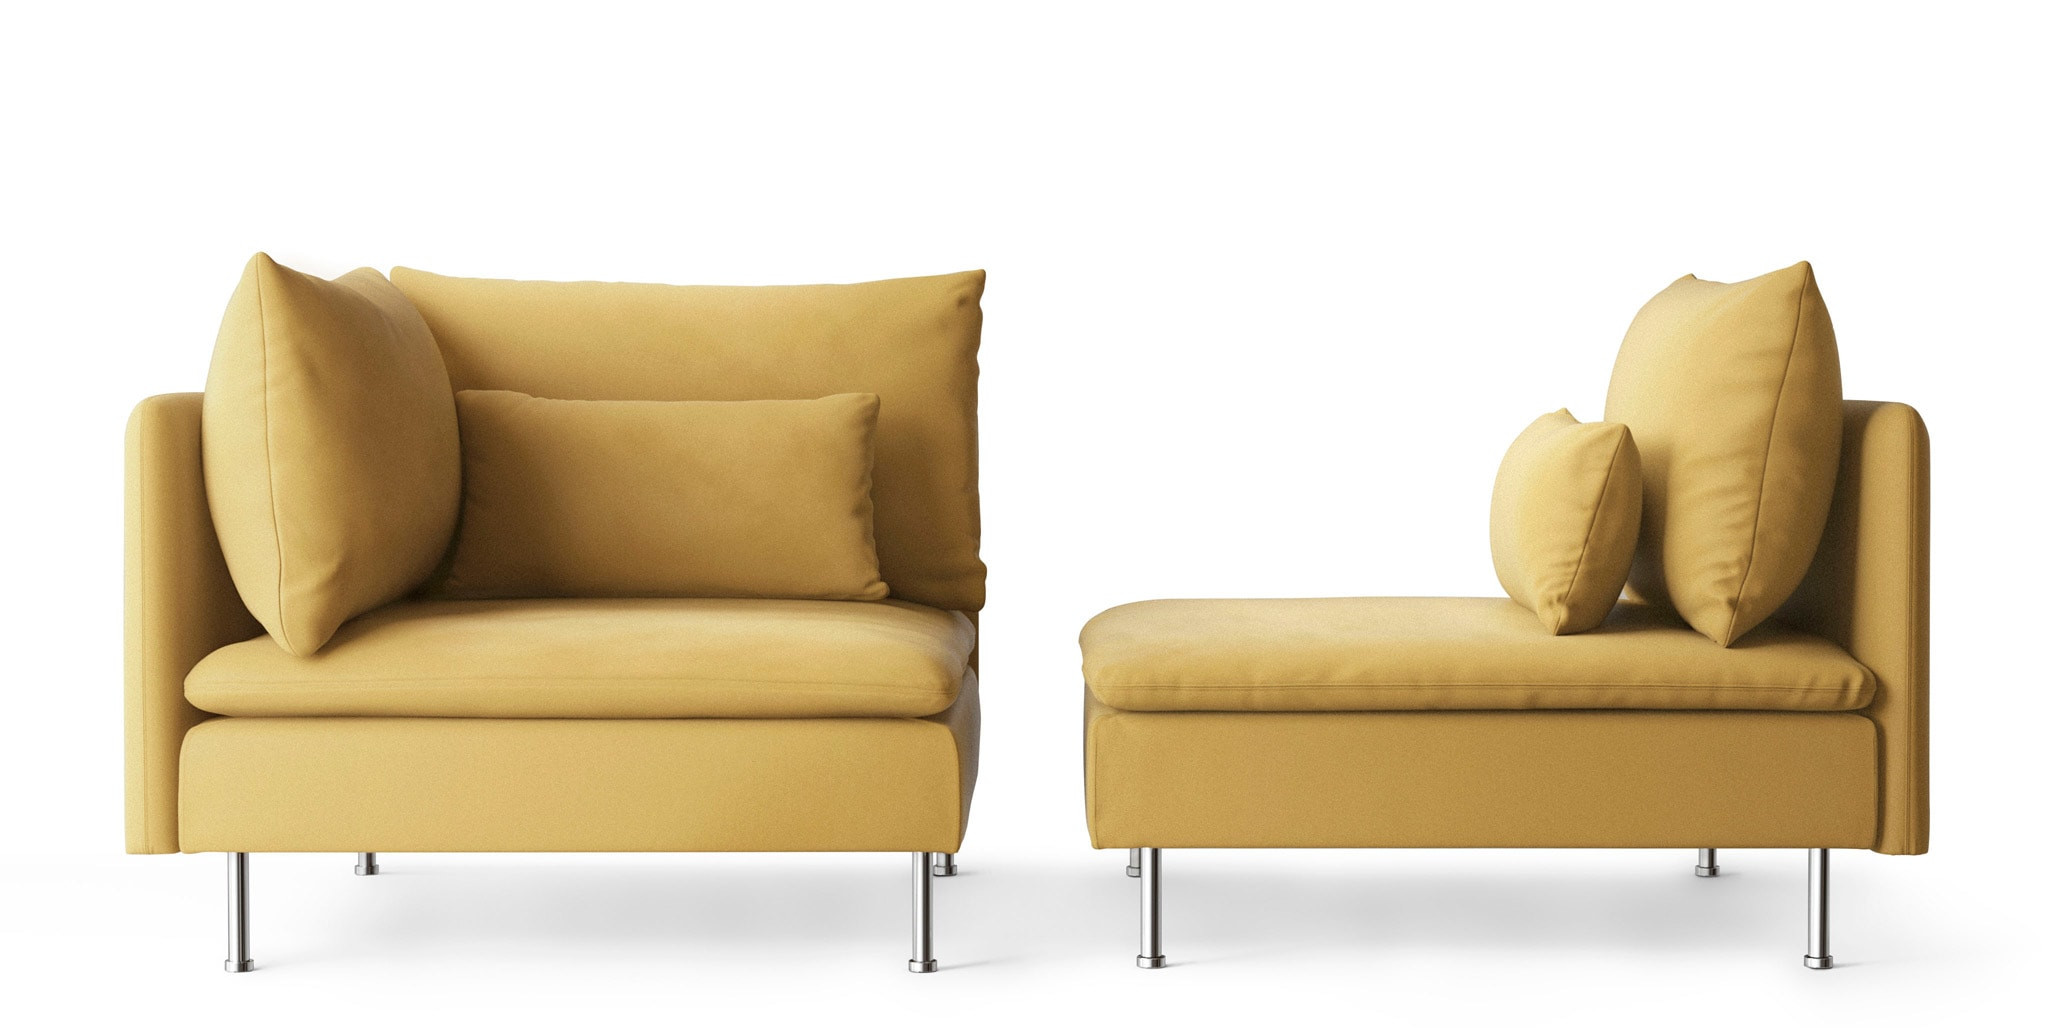 Best ideas about Ikea Modular Sofa
. Save or Pin Modular Fabric Sofas Now.